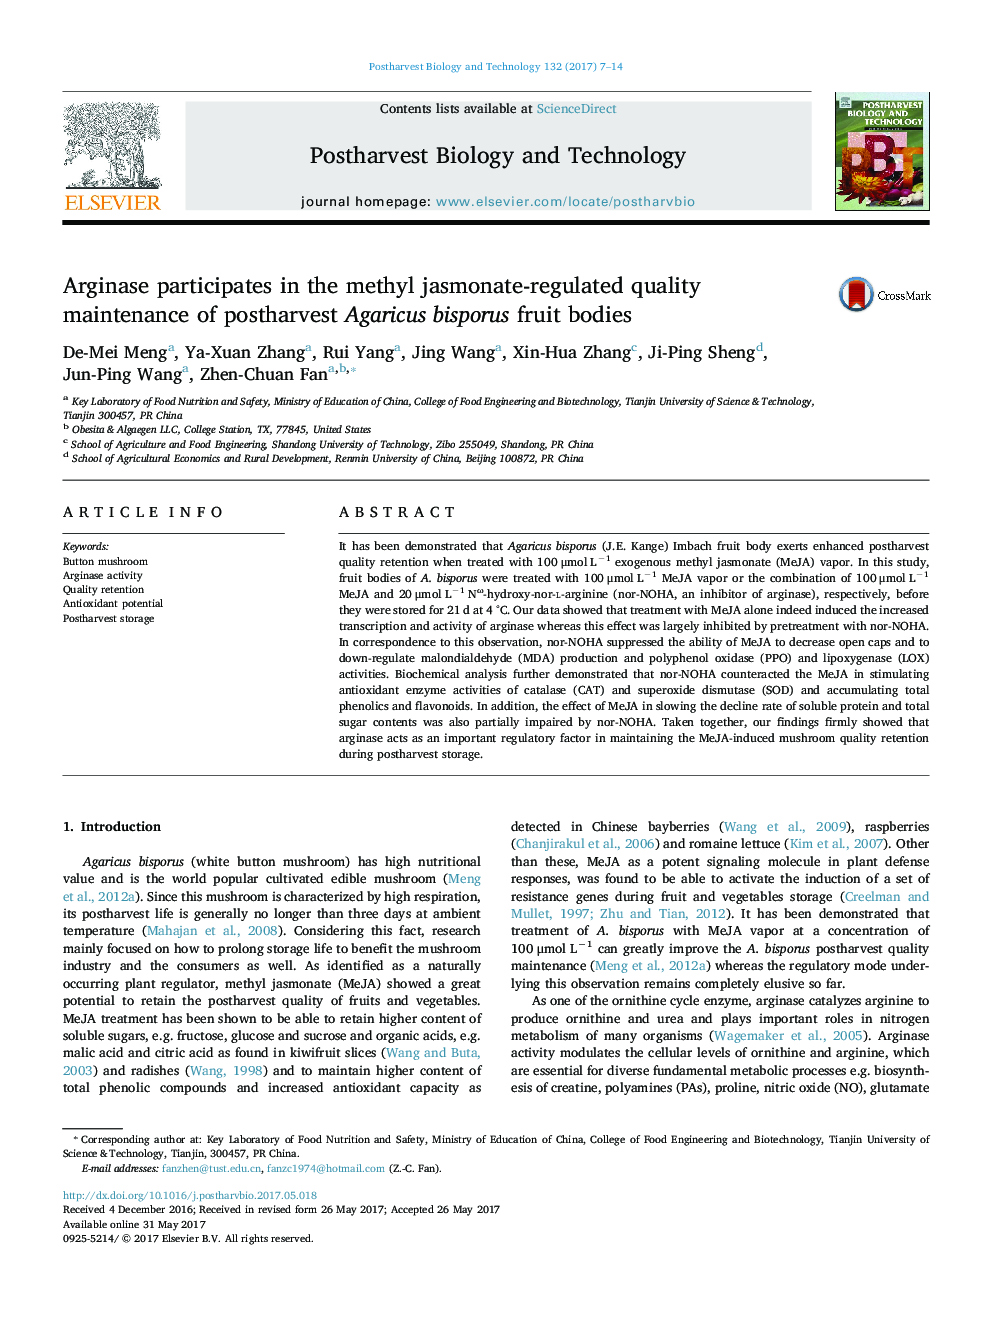 Arginase participates in the methyl jasmonate-regulated quality maintenance of postharvest Agaricus bisporus fruit bodies